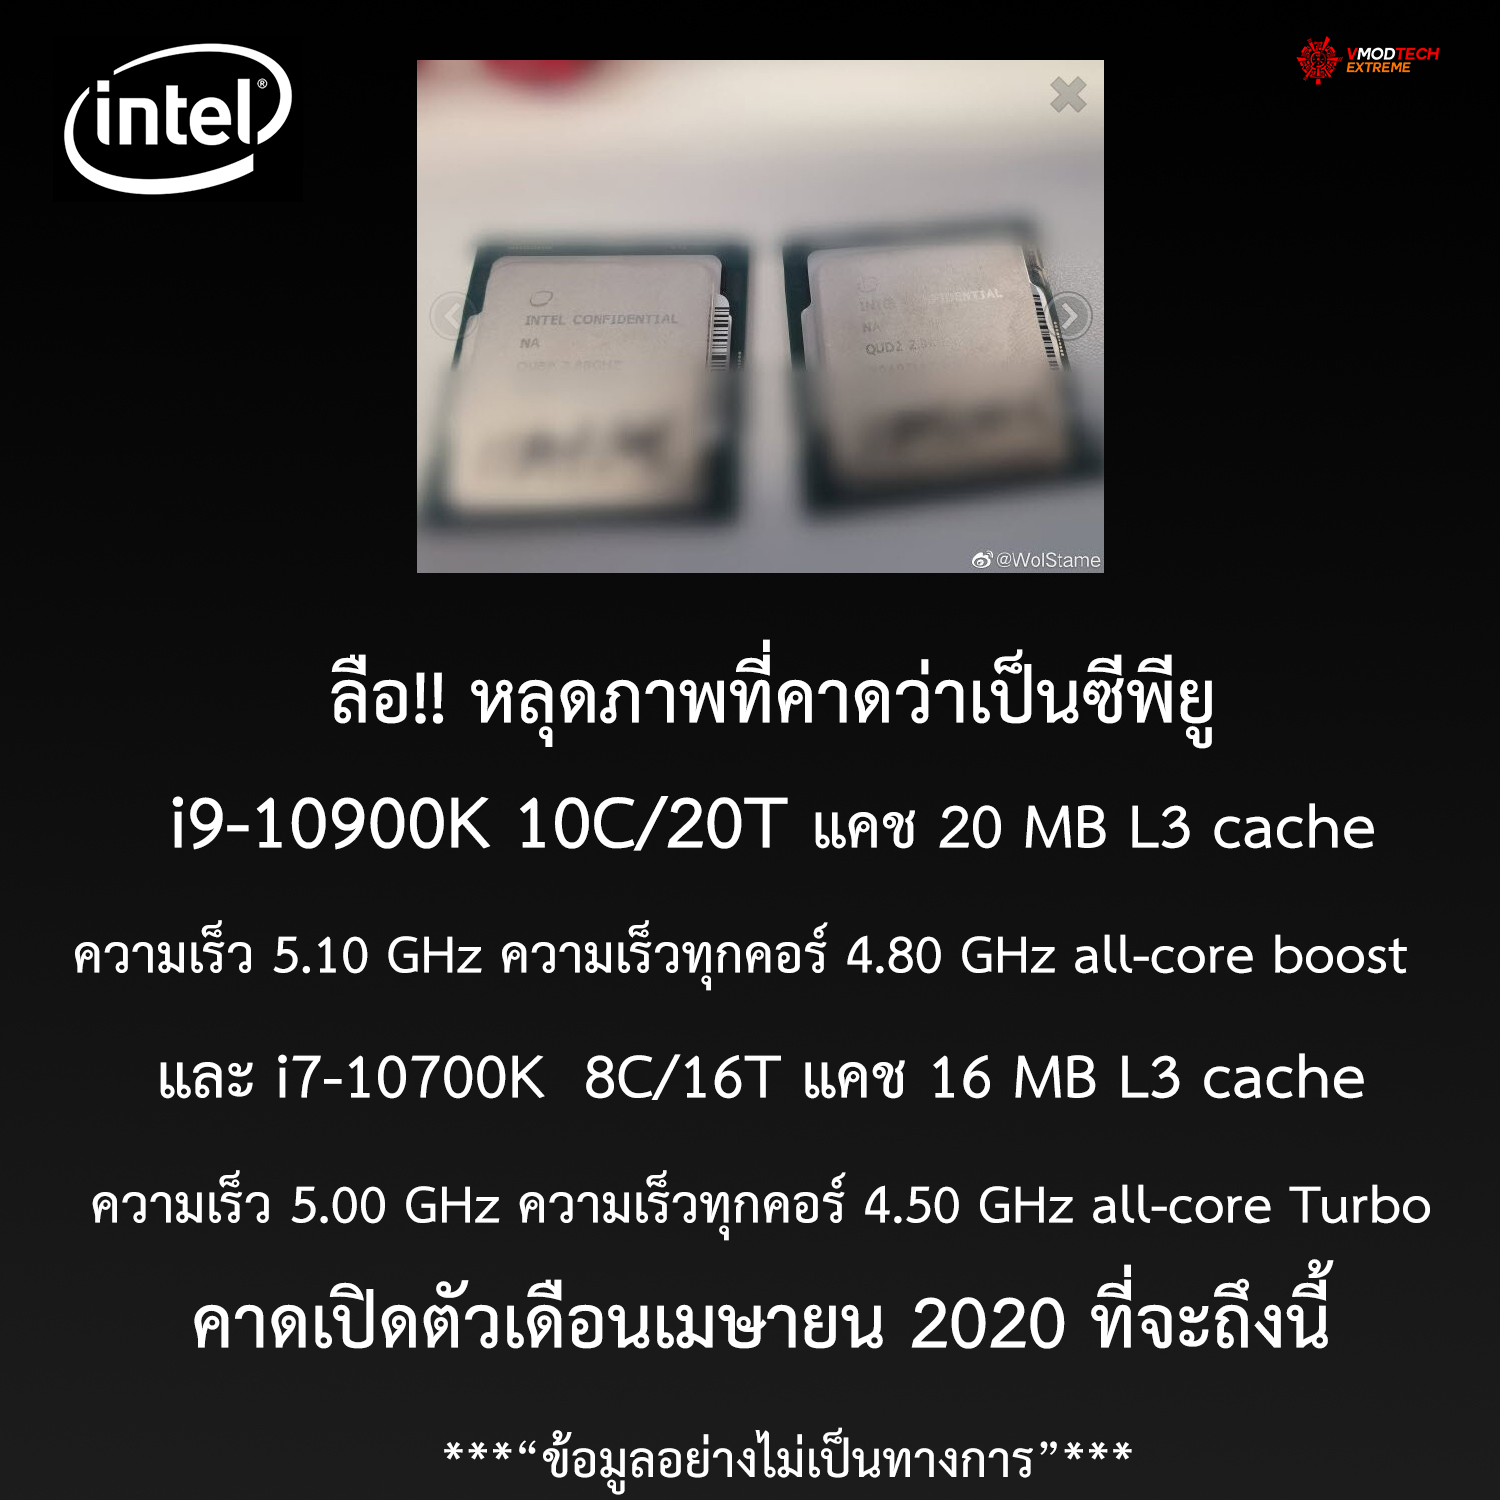 intel core i9 10900k i7 10700k picture ลือ!! หลุดภาพที่คาดว่าเป็นซีพียู Intel Core i9 10900K และ i7 10700K ที่ยังไม่เปิดตัวอย่างเป็นทางการ